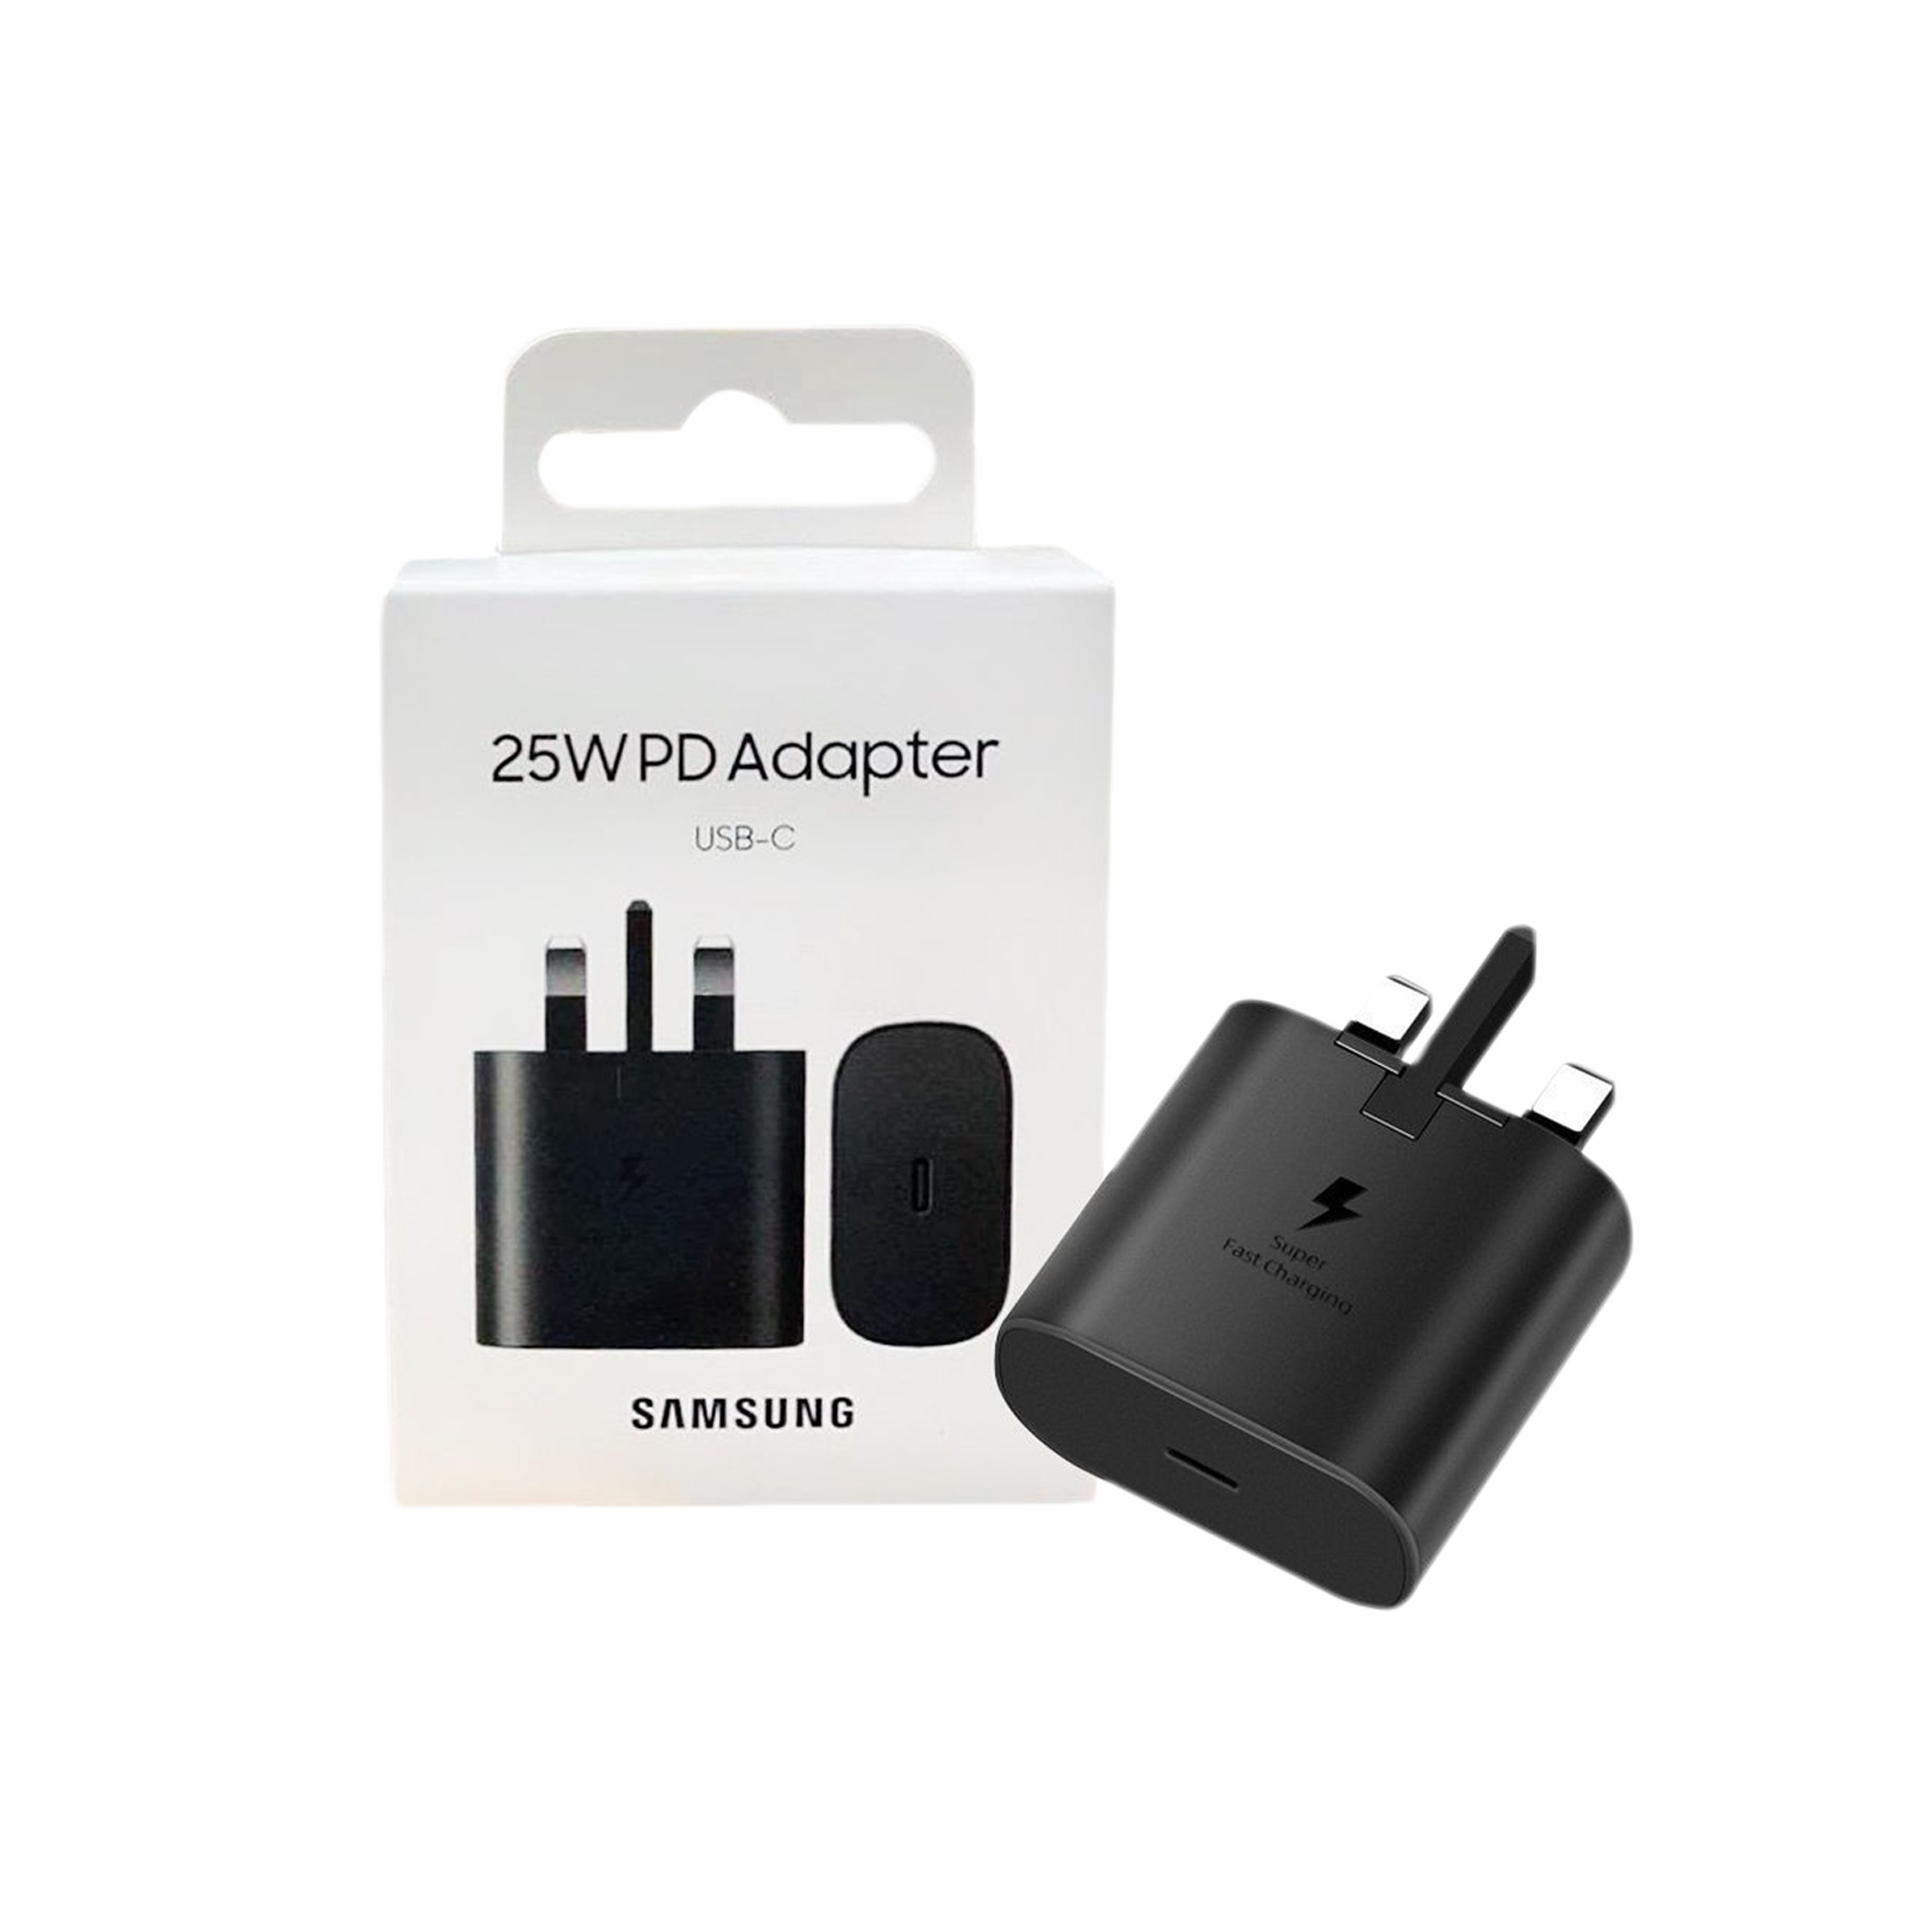 Samsung 25W PD Adapter USB-C